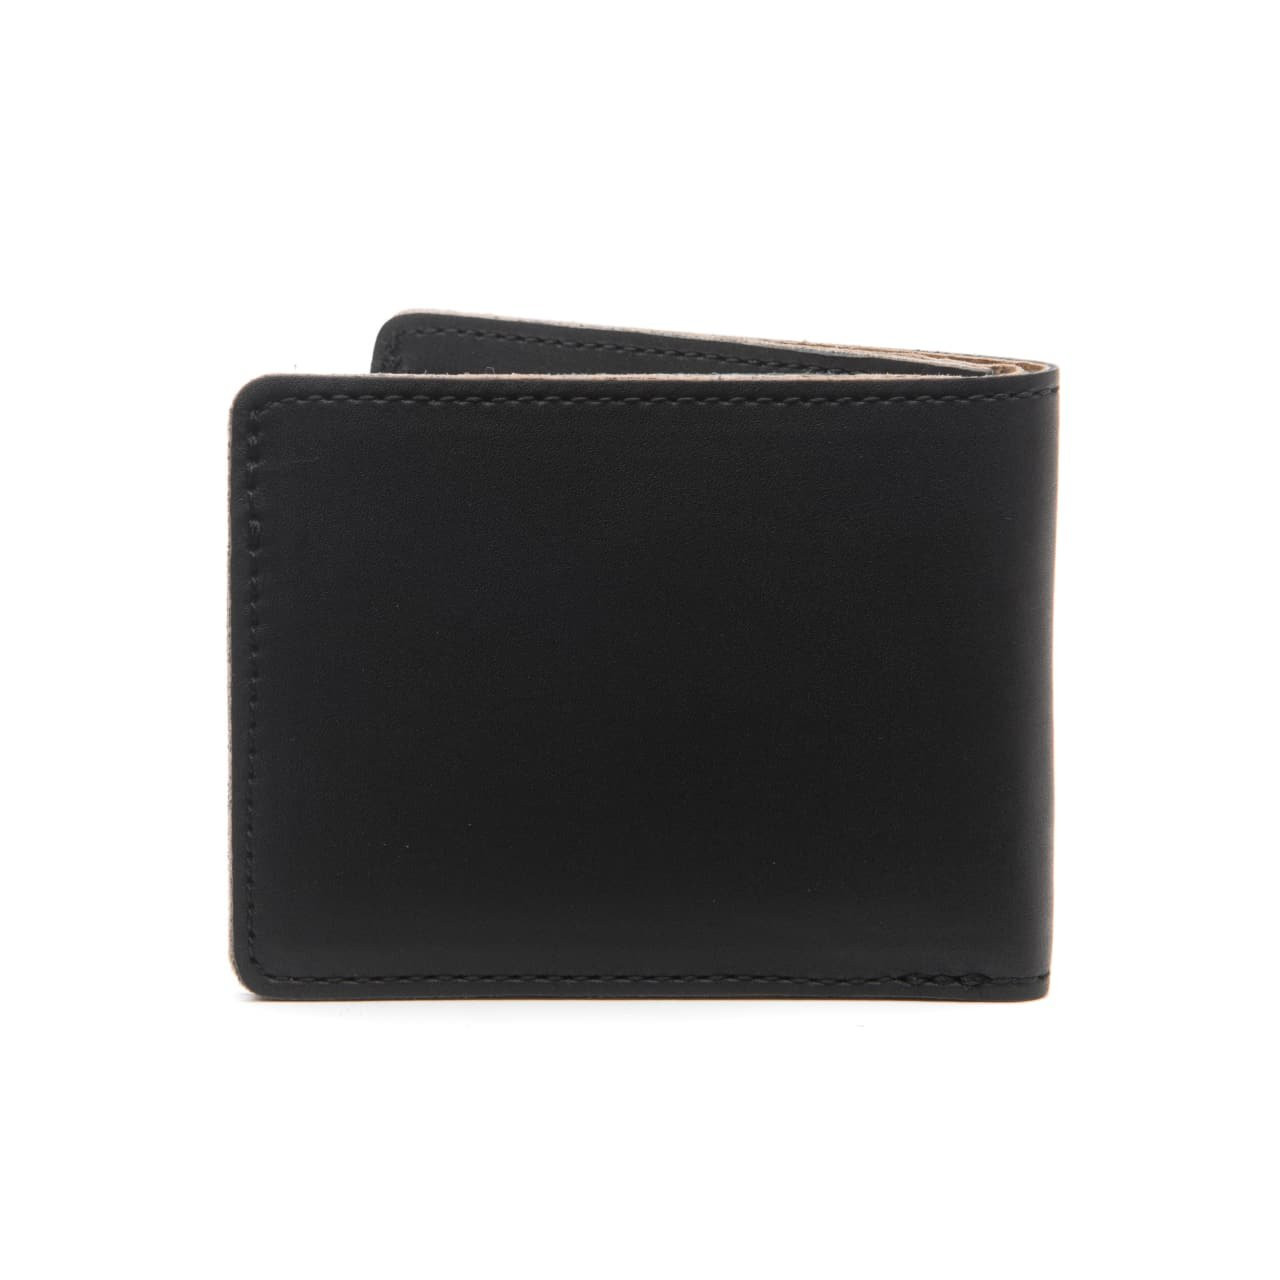 Off-White Men's Jitney Leather Bifold Wallet, Black Blue, Men's, Small Leather Goods Billfolds Bifold Trifold Wallets